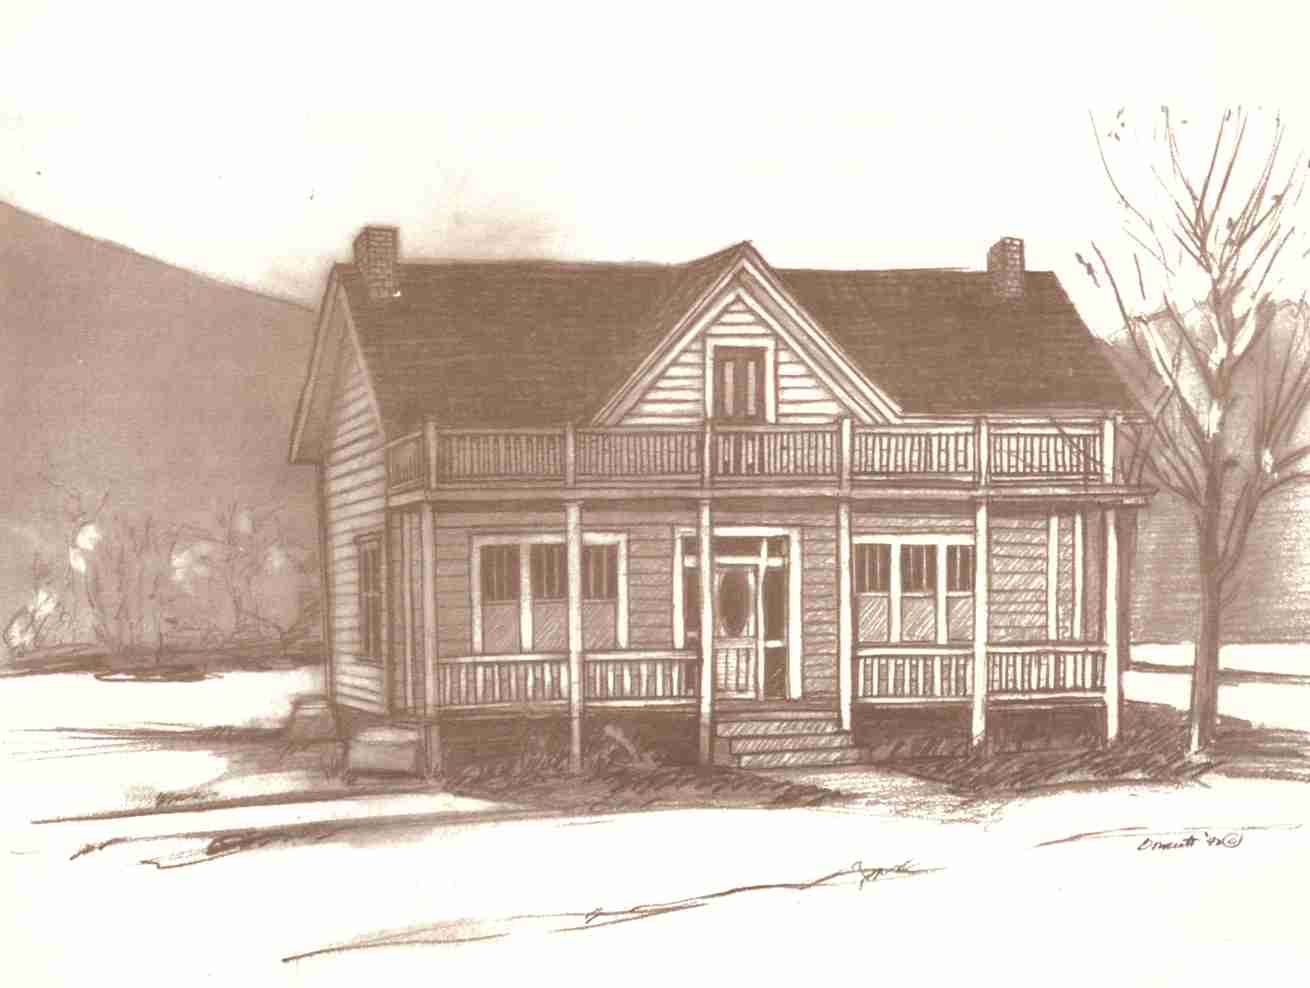 Sketch of the John Jacob Ruesch Home